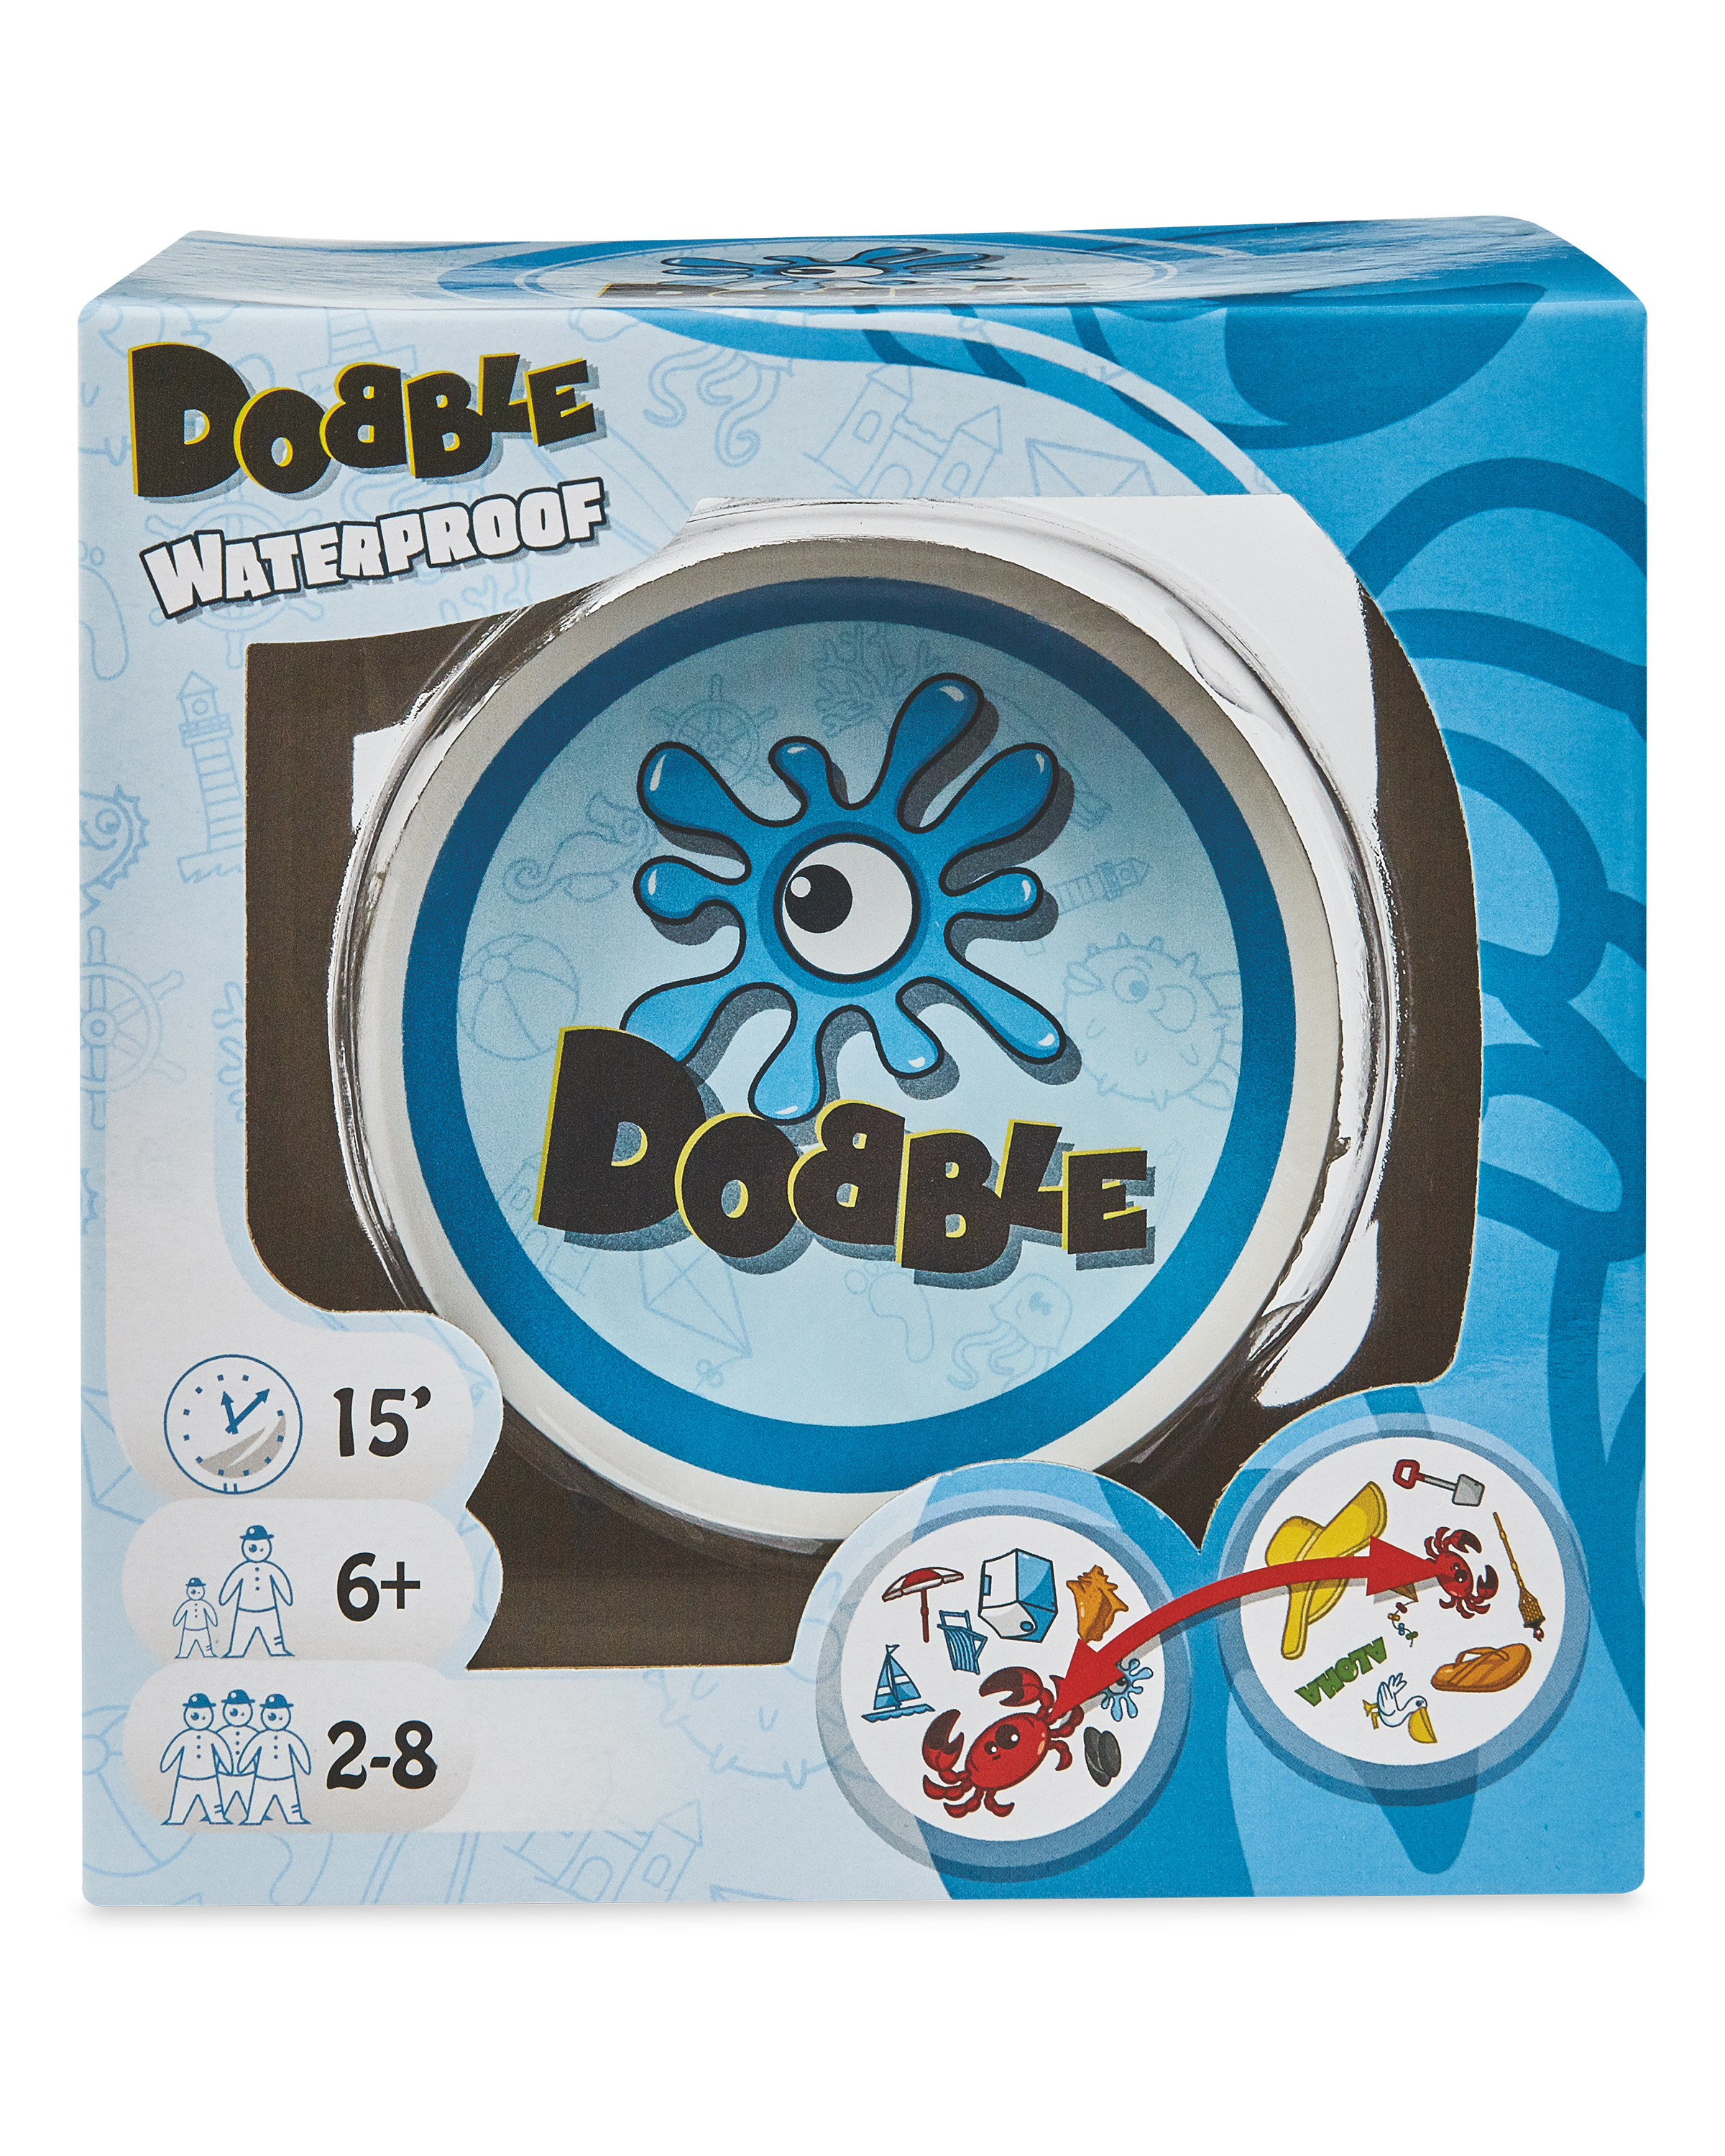 Dobble Kids Card Game - ALDI UK